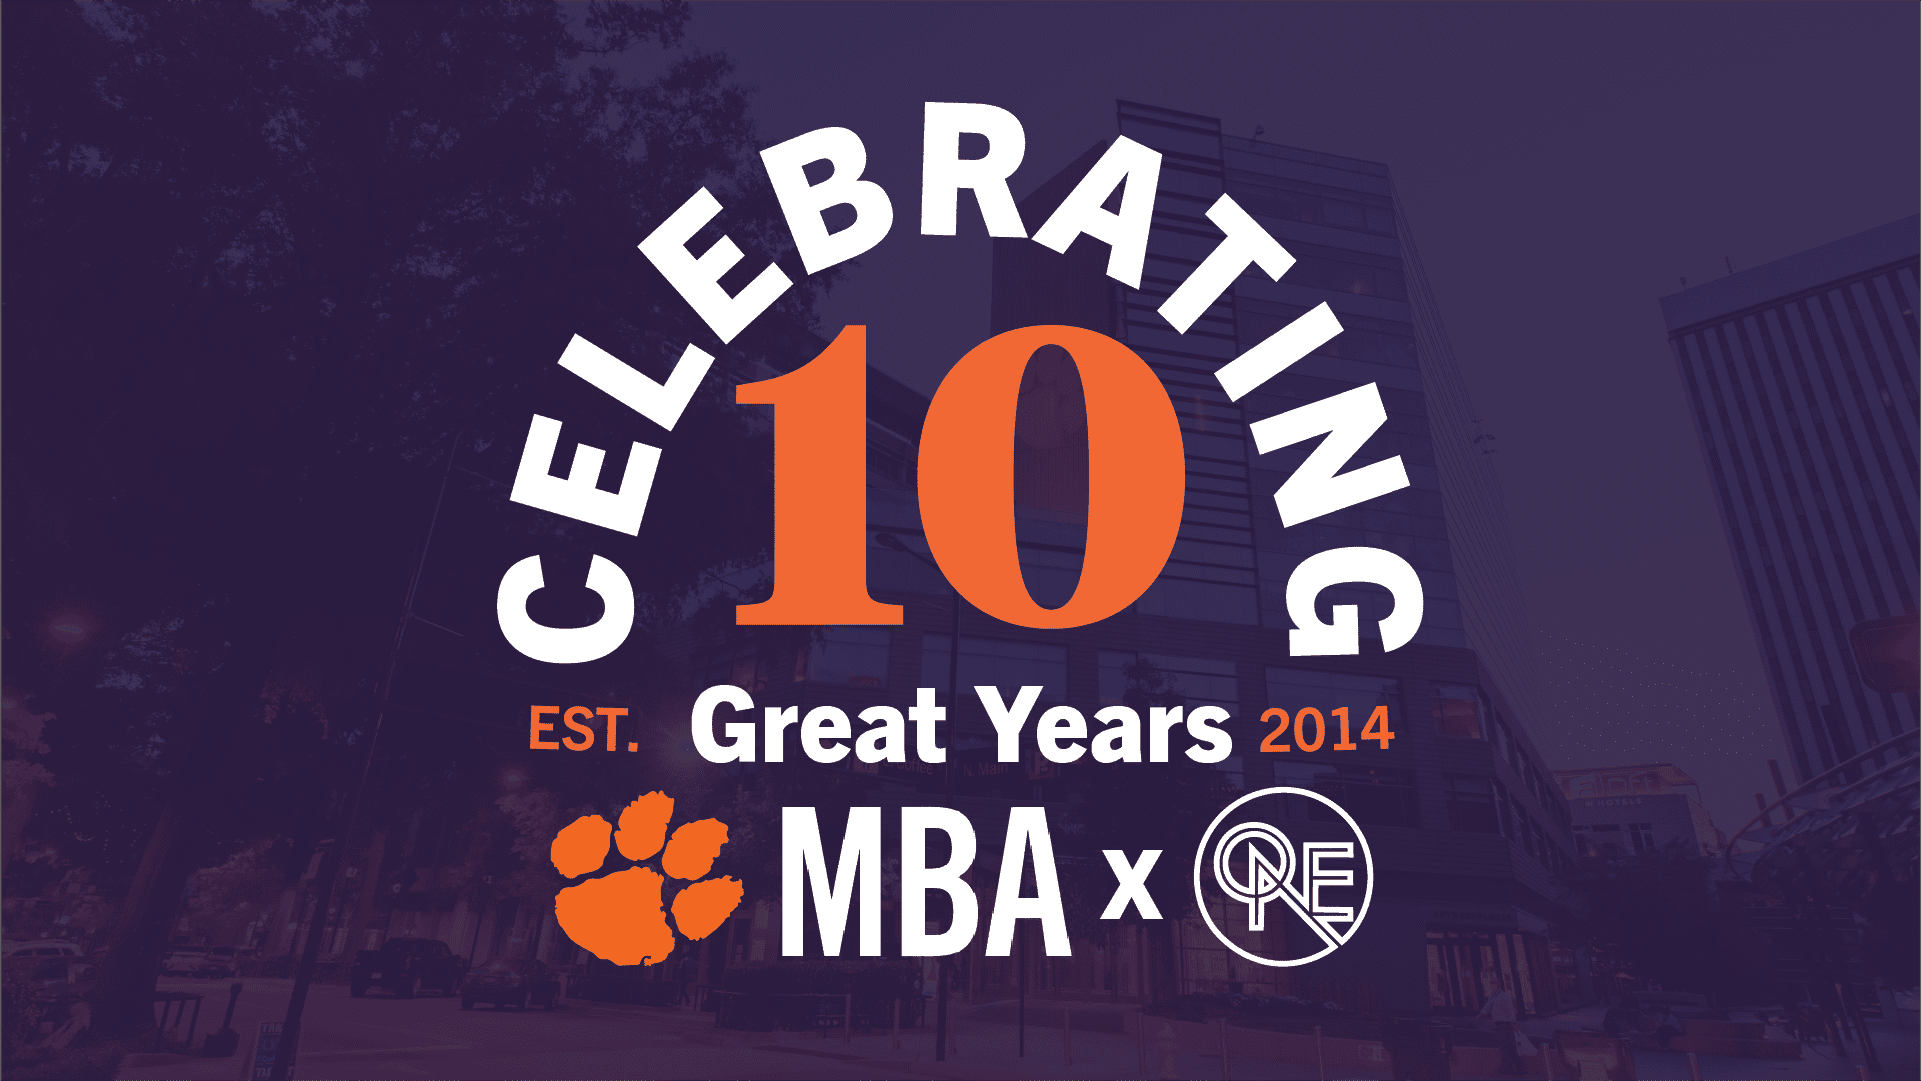 Celebrating ten great years MBA